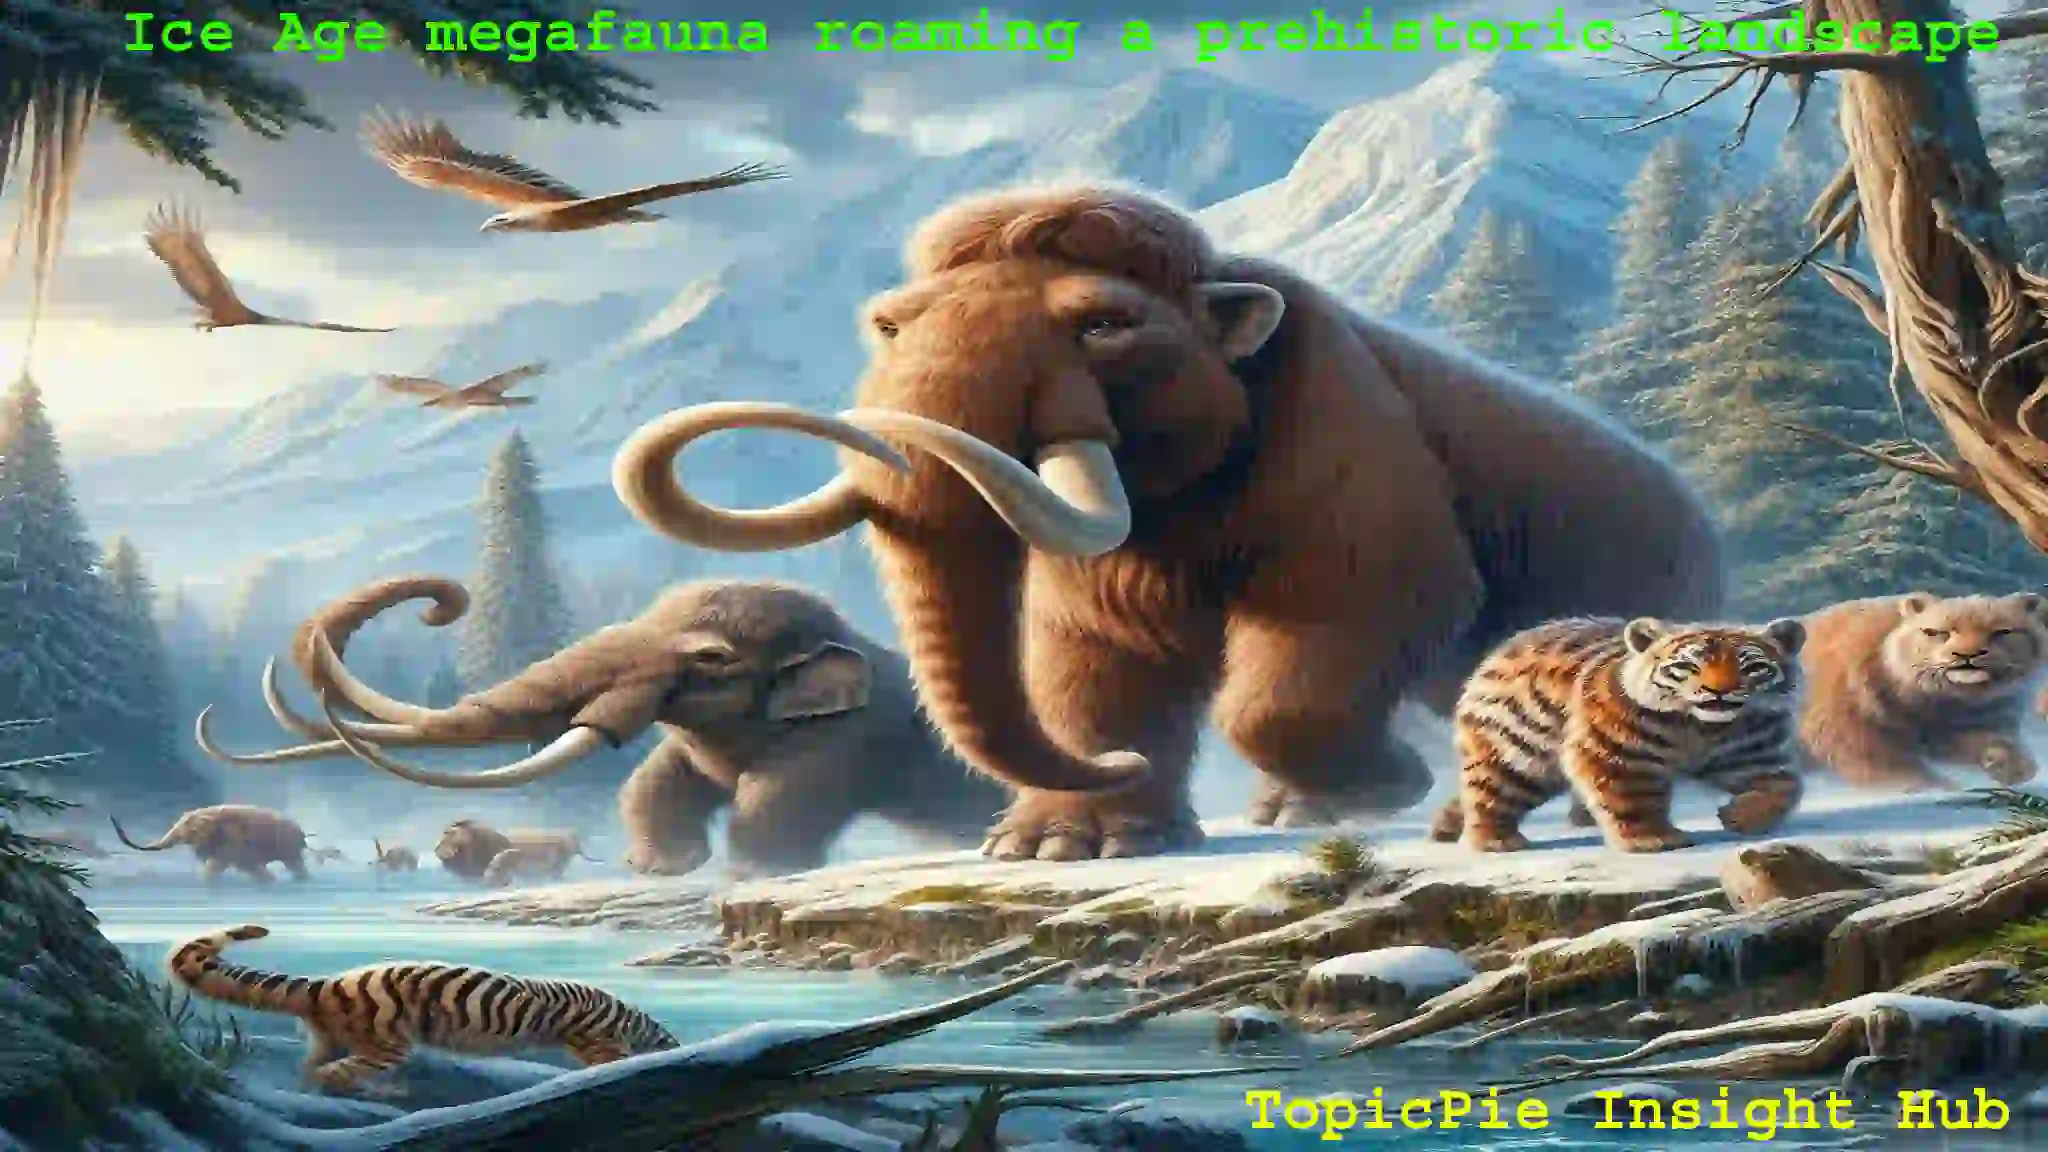 Ice Age megafauna roaming a prehistoric landscape